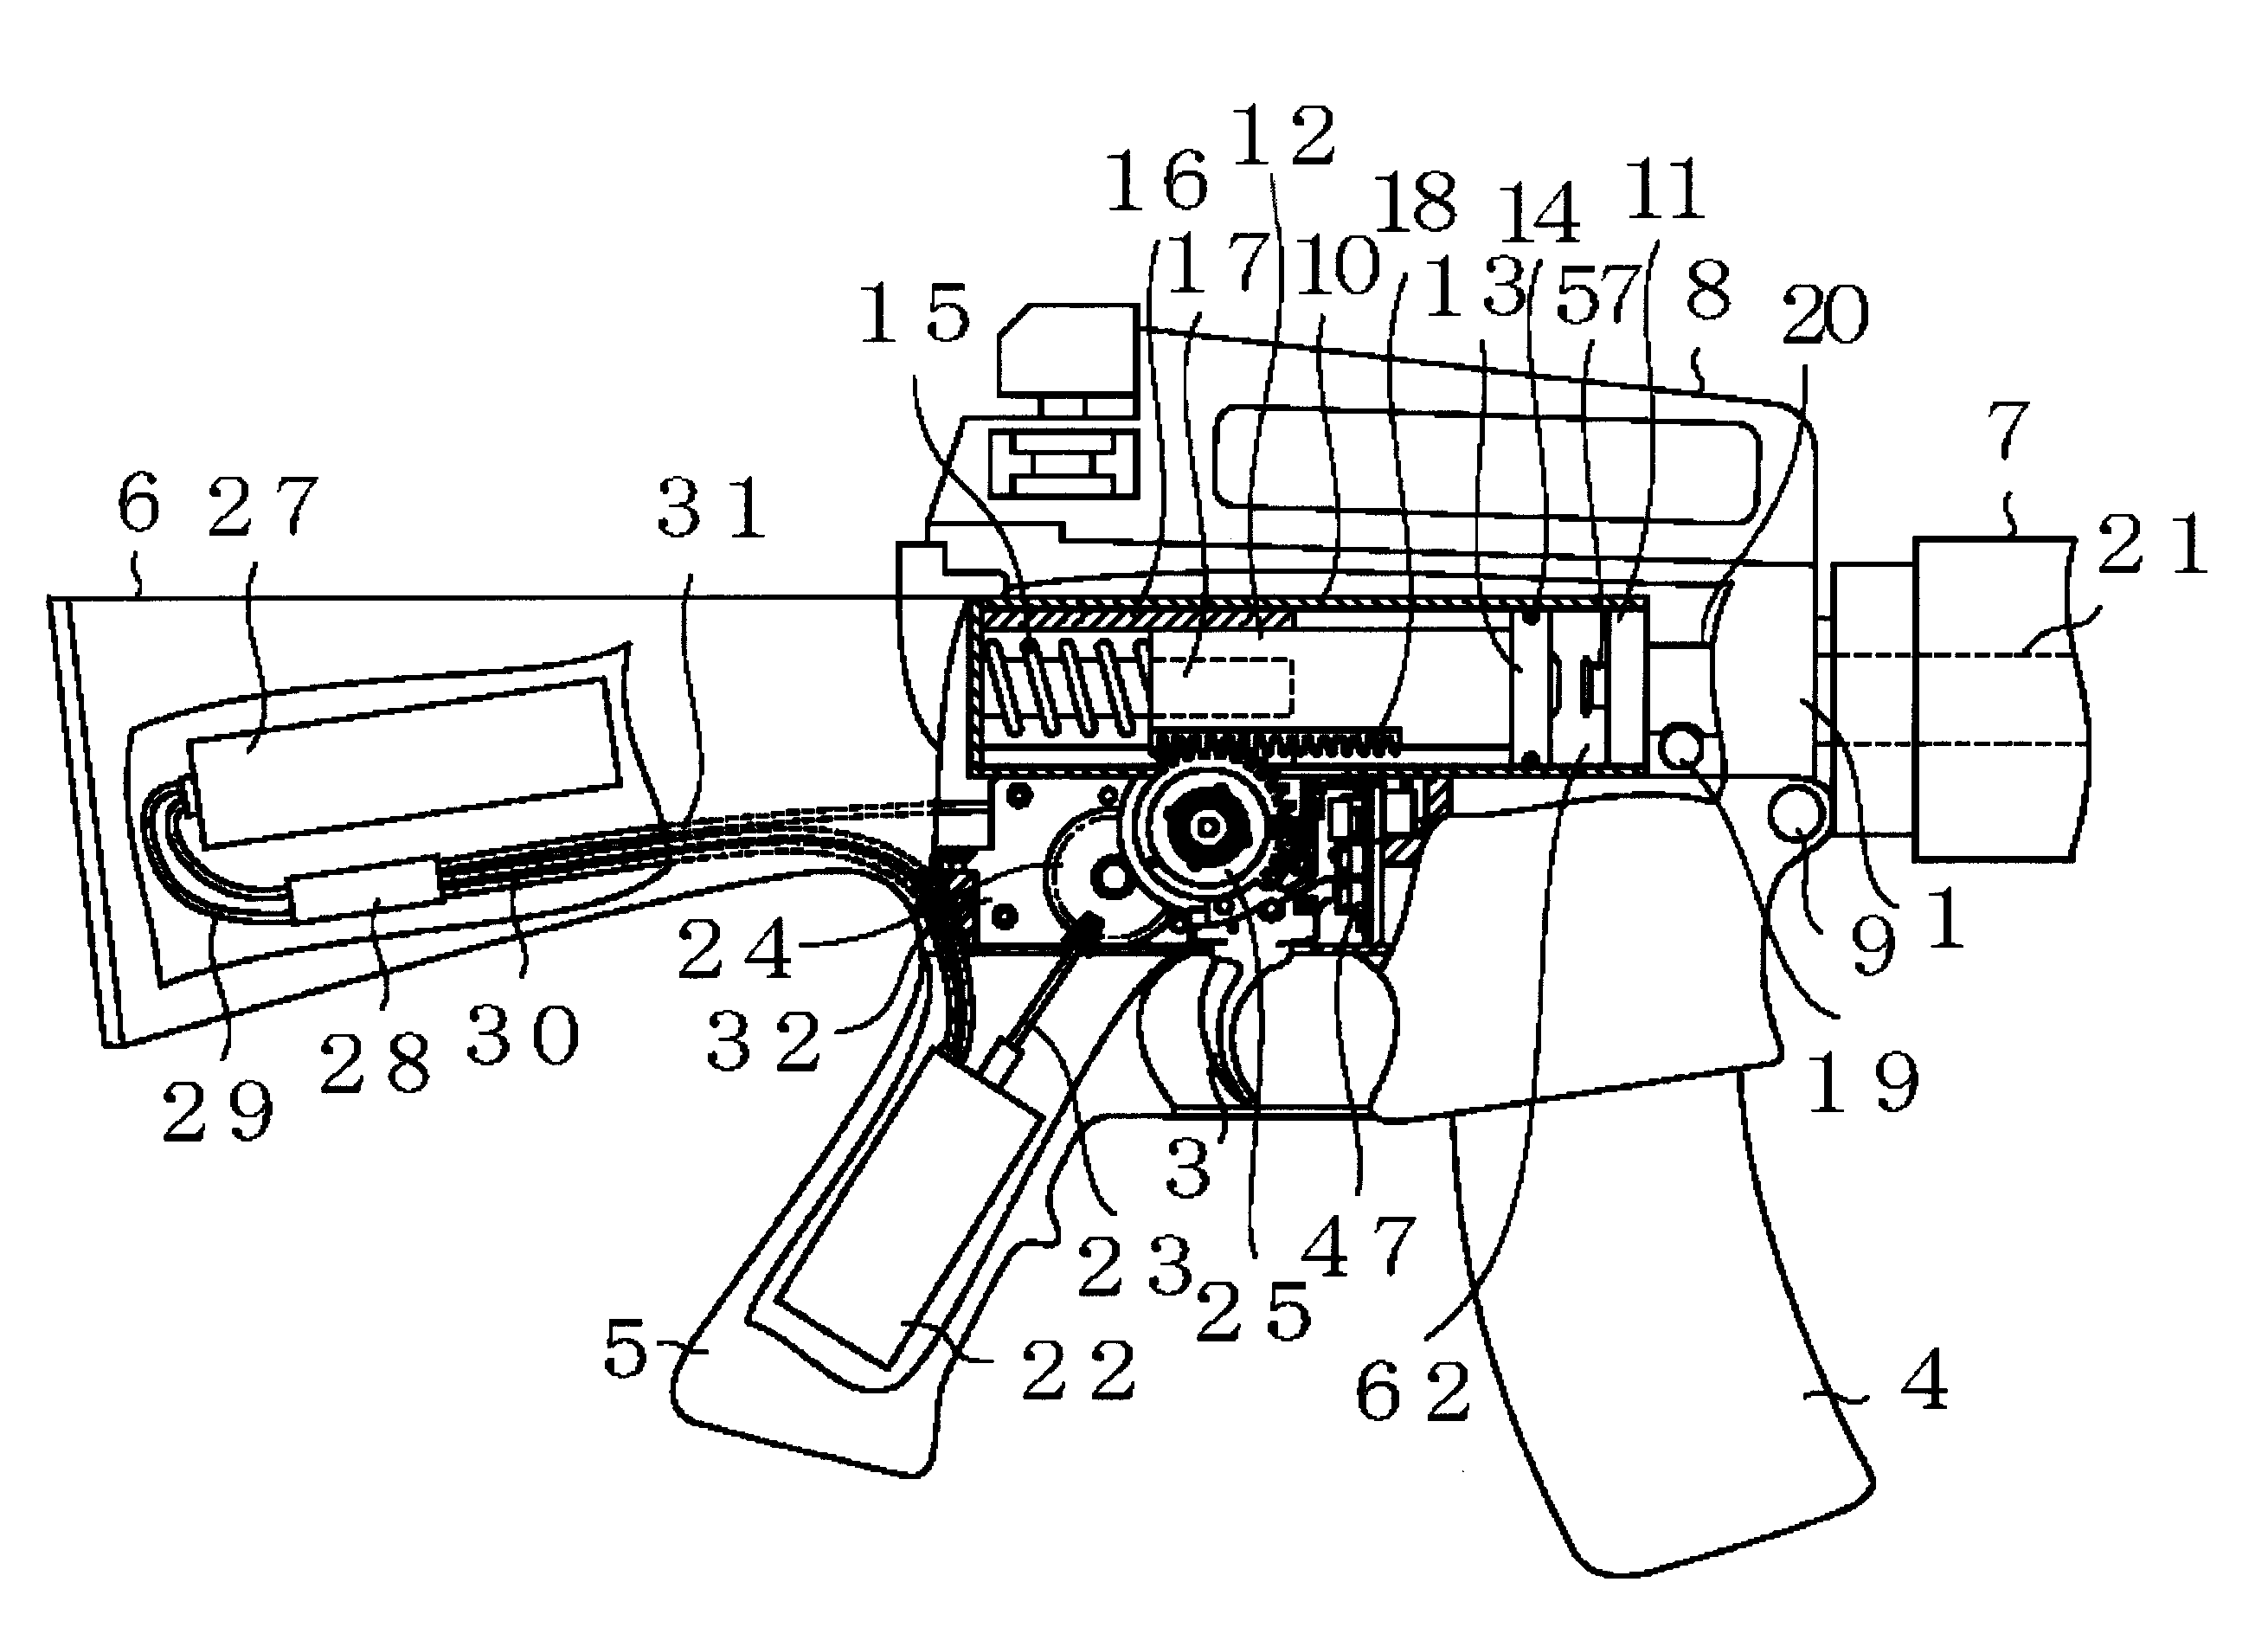 Air Gun and Firing Stop Control Method